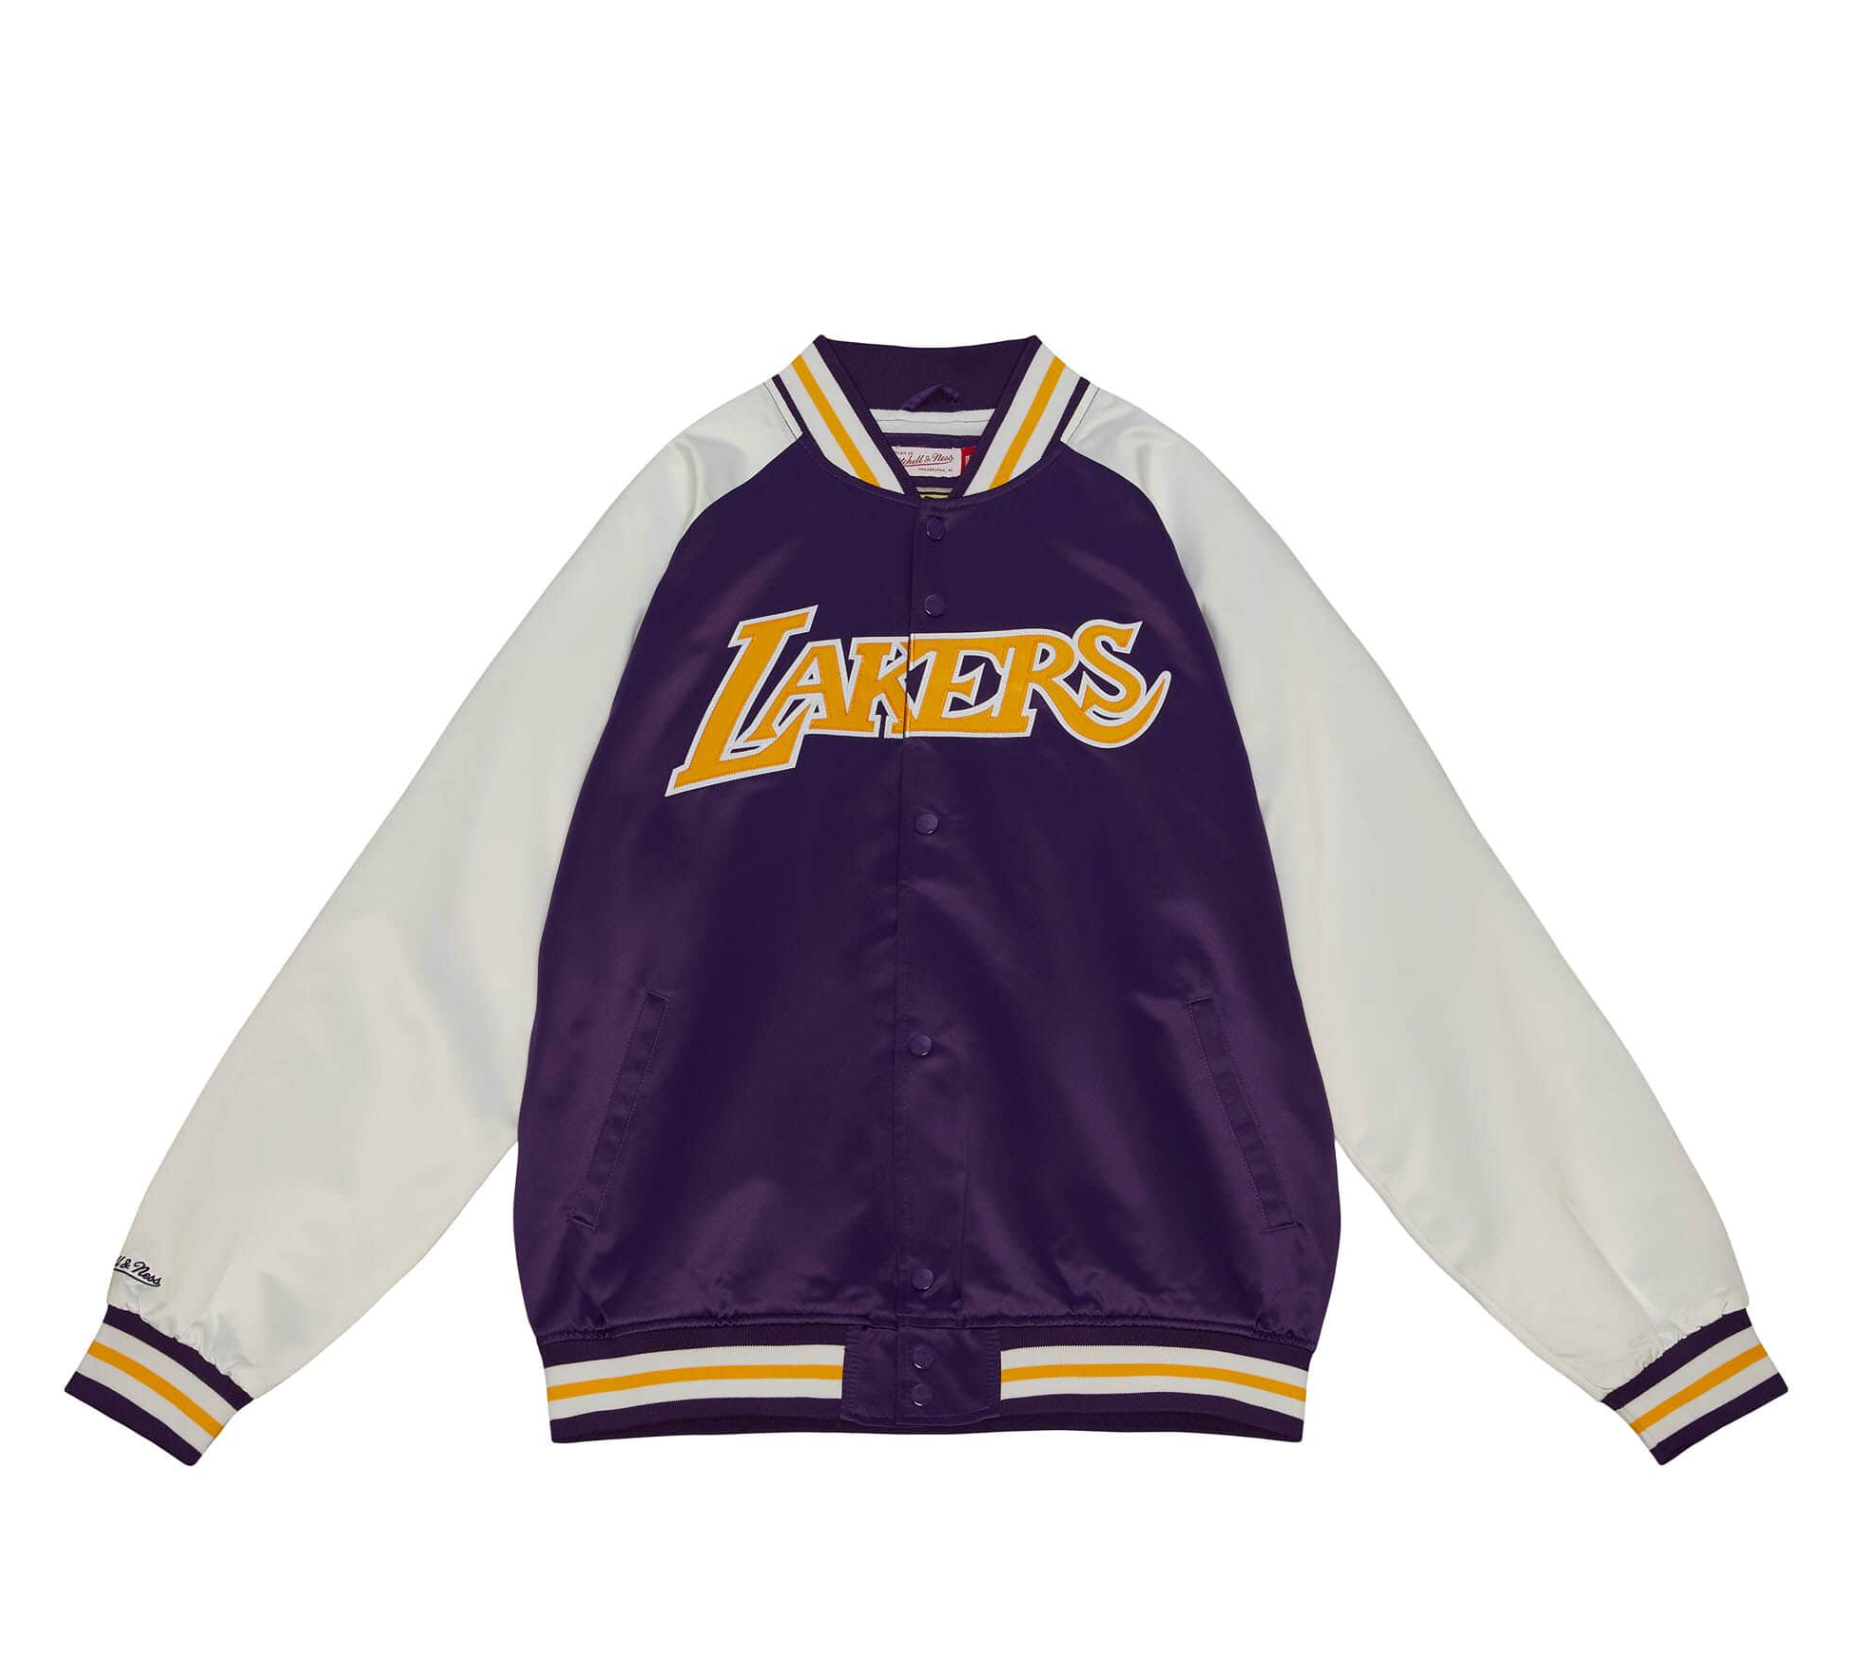 lakers jacket black and purple